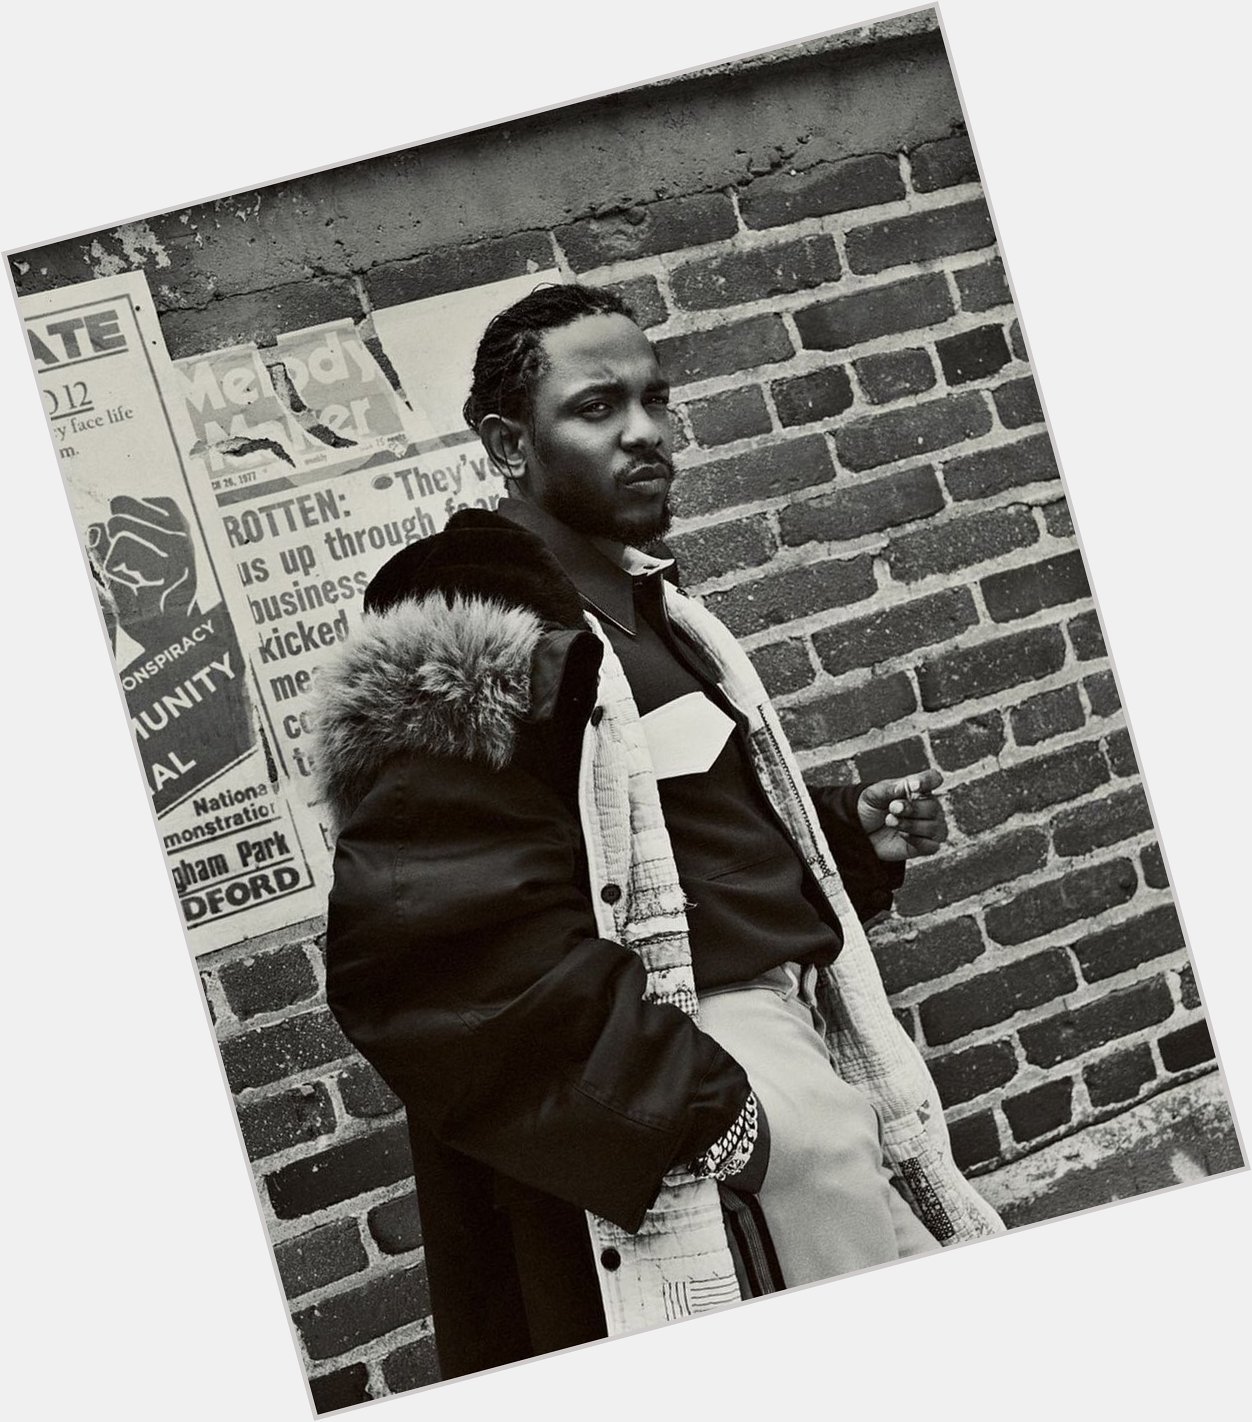 Happy Birthday Kendrick Lamar 